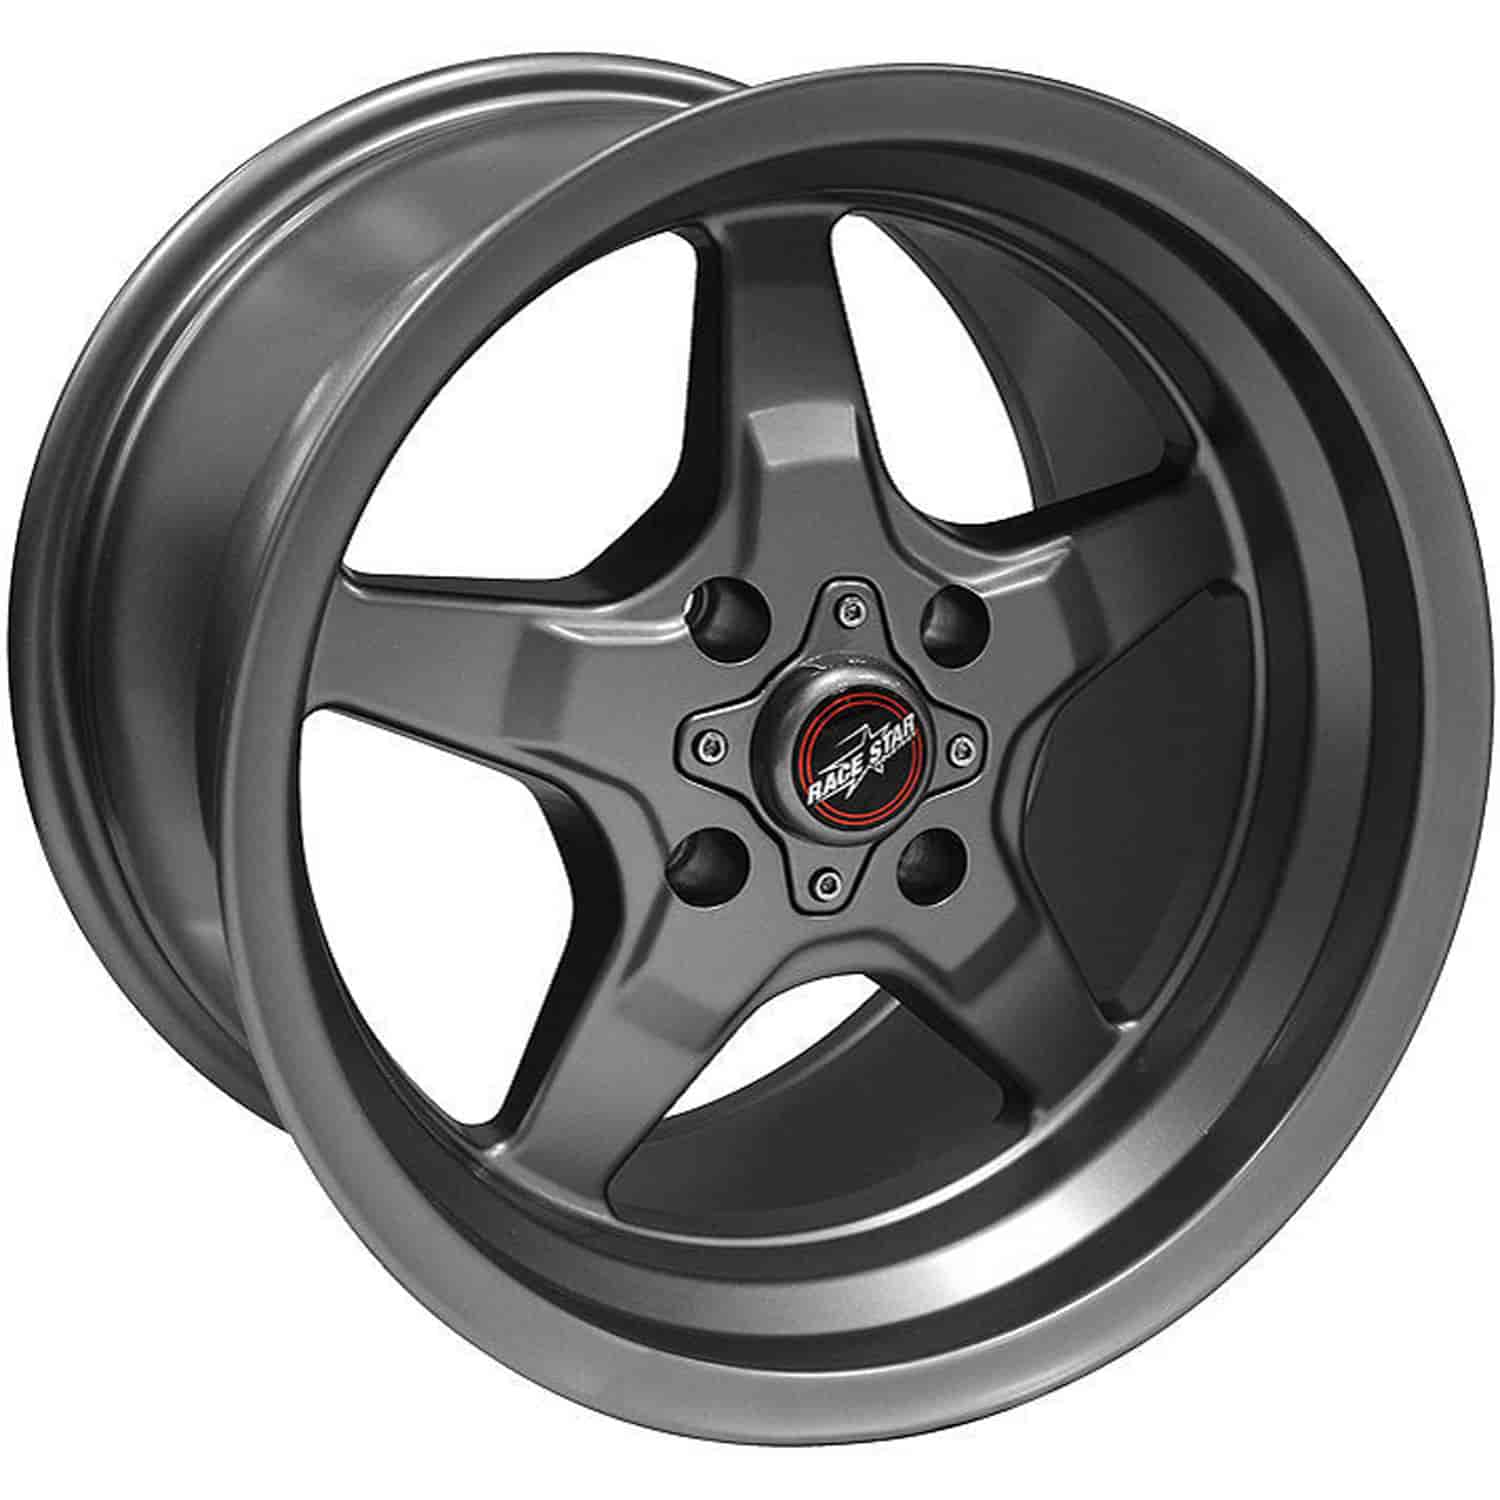 91 Series Drag Star Wheel 15" x 8" , 5.5" RS